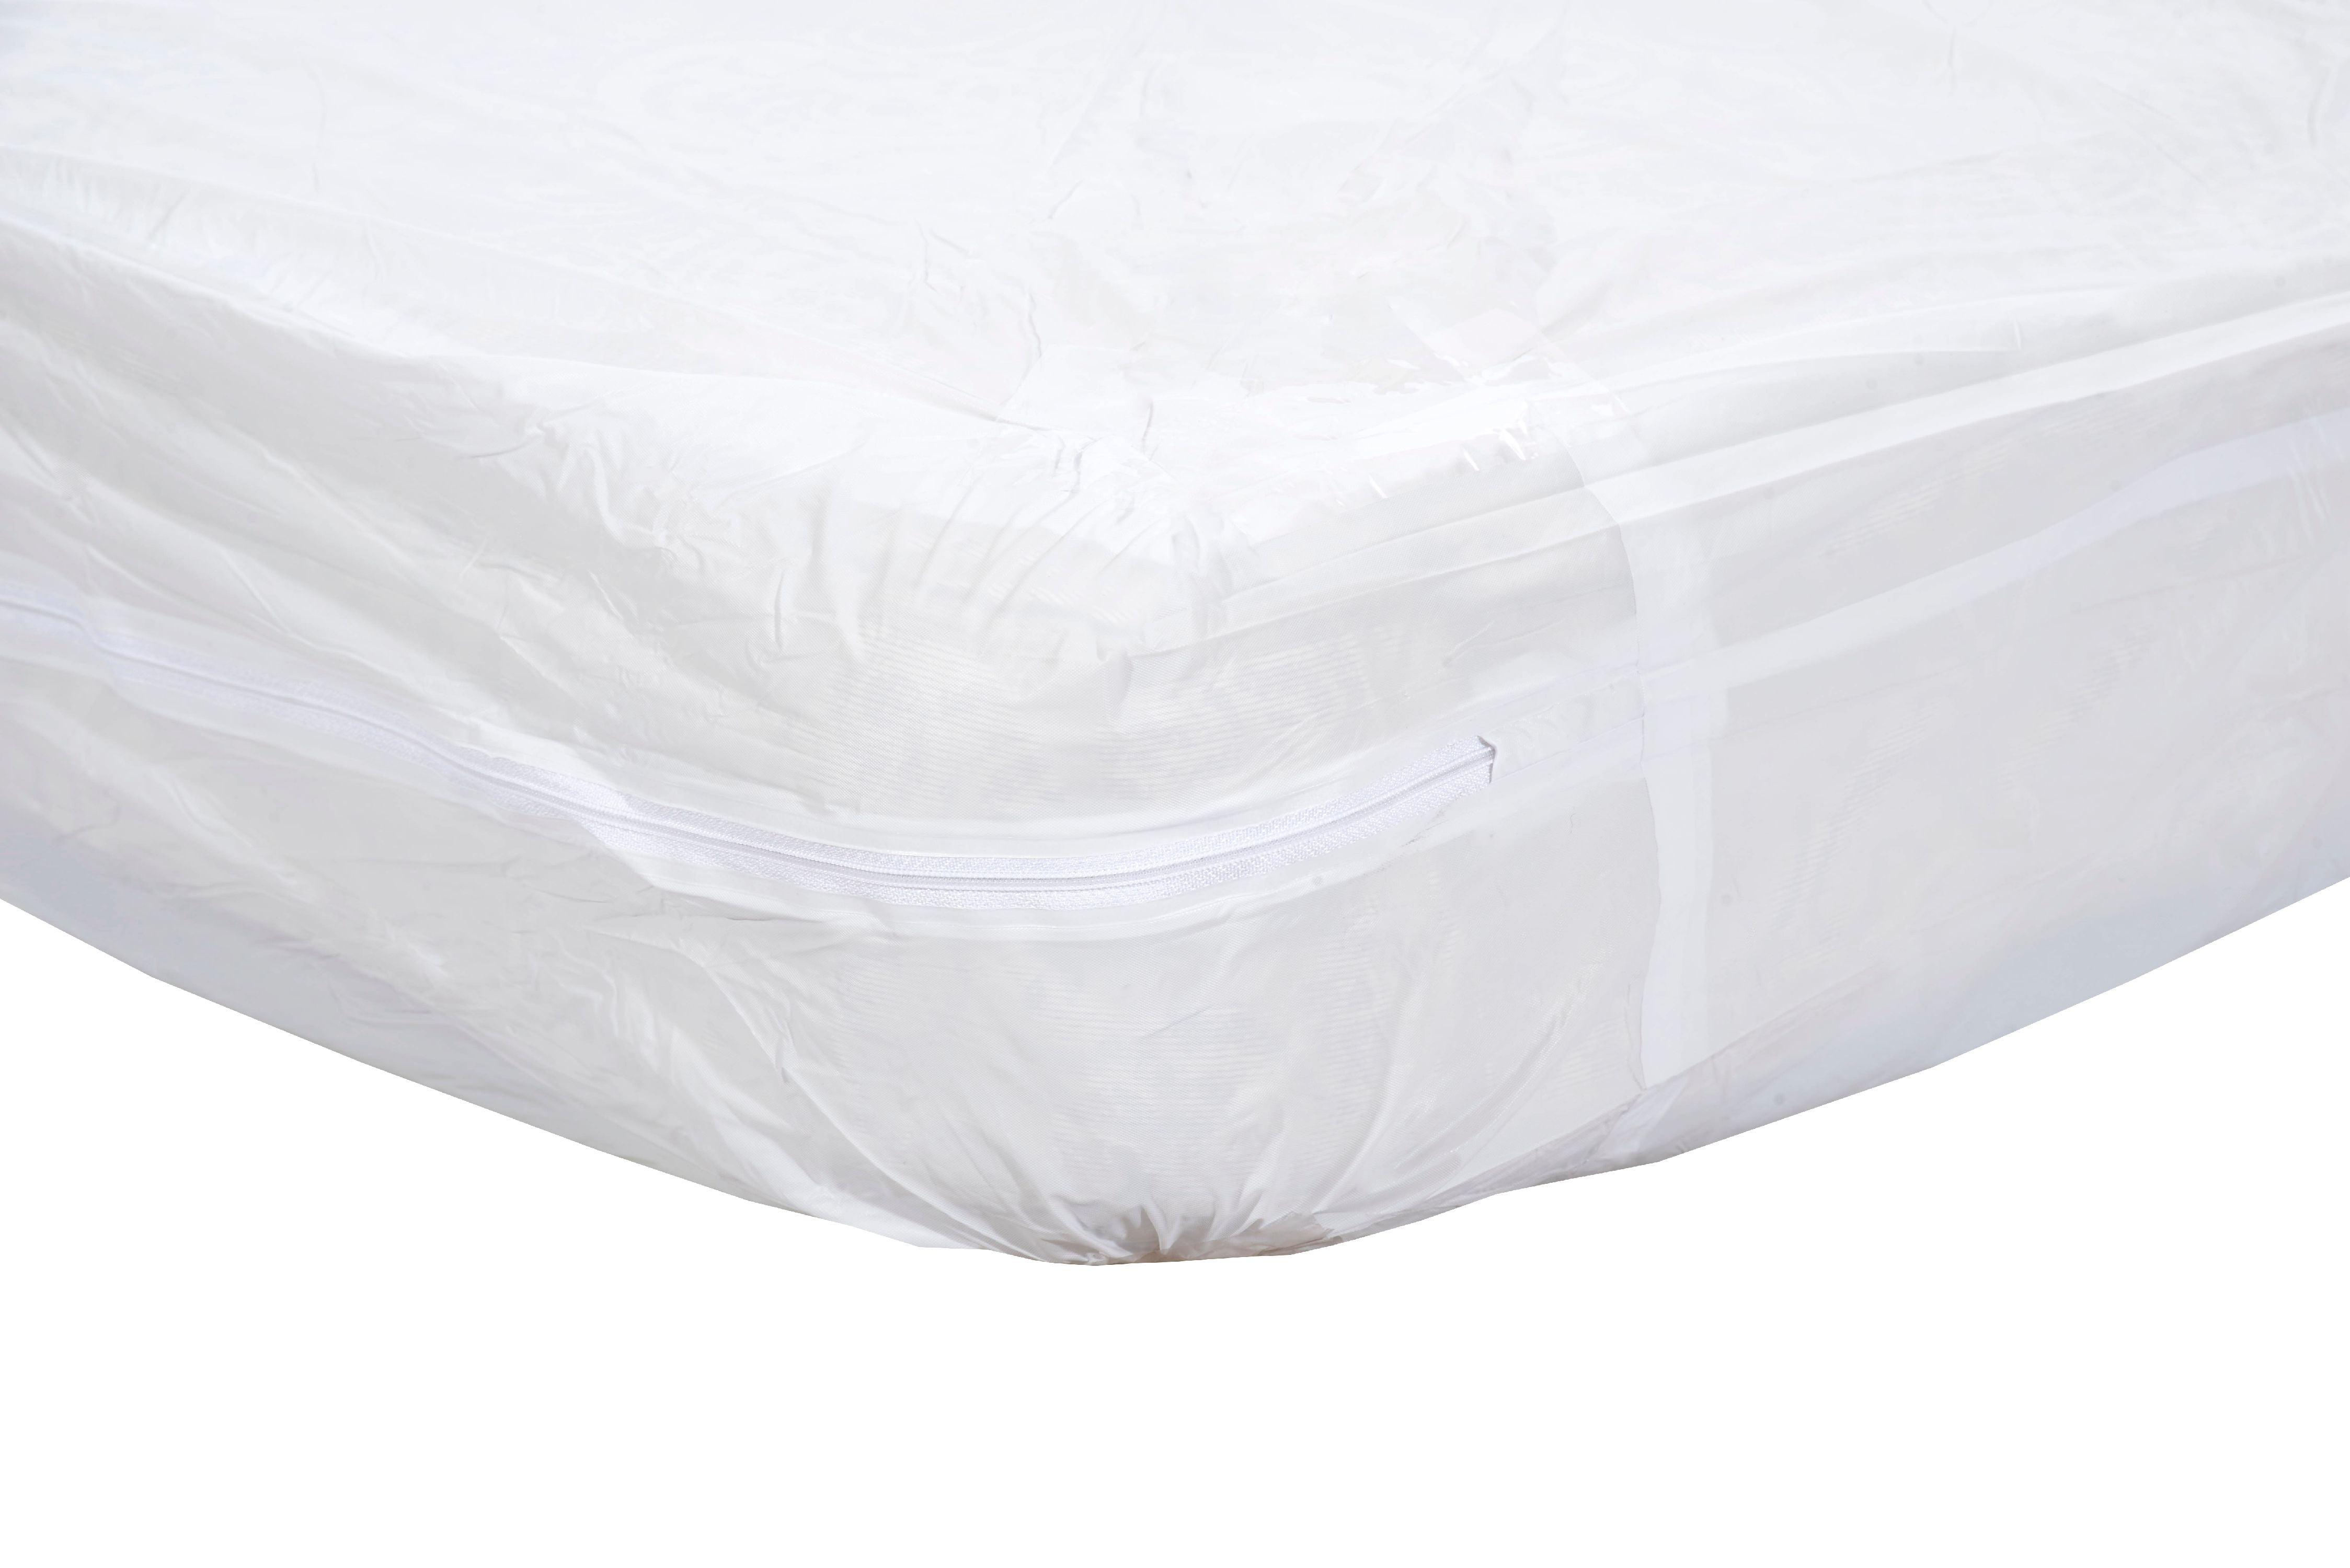 plastic mattress cover for urine